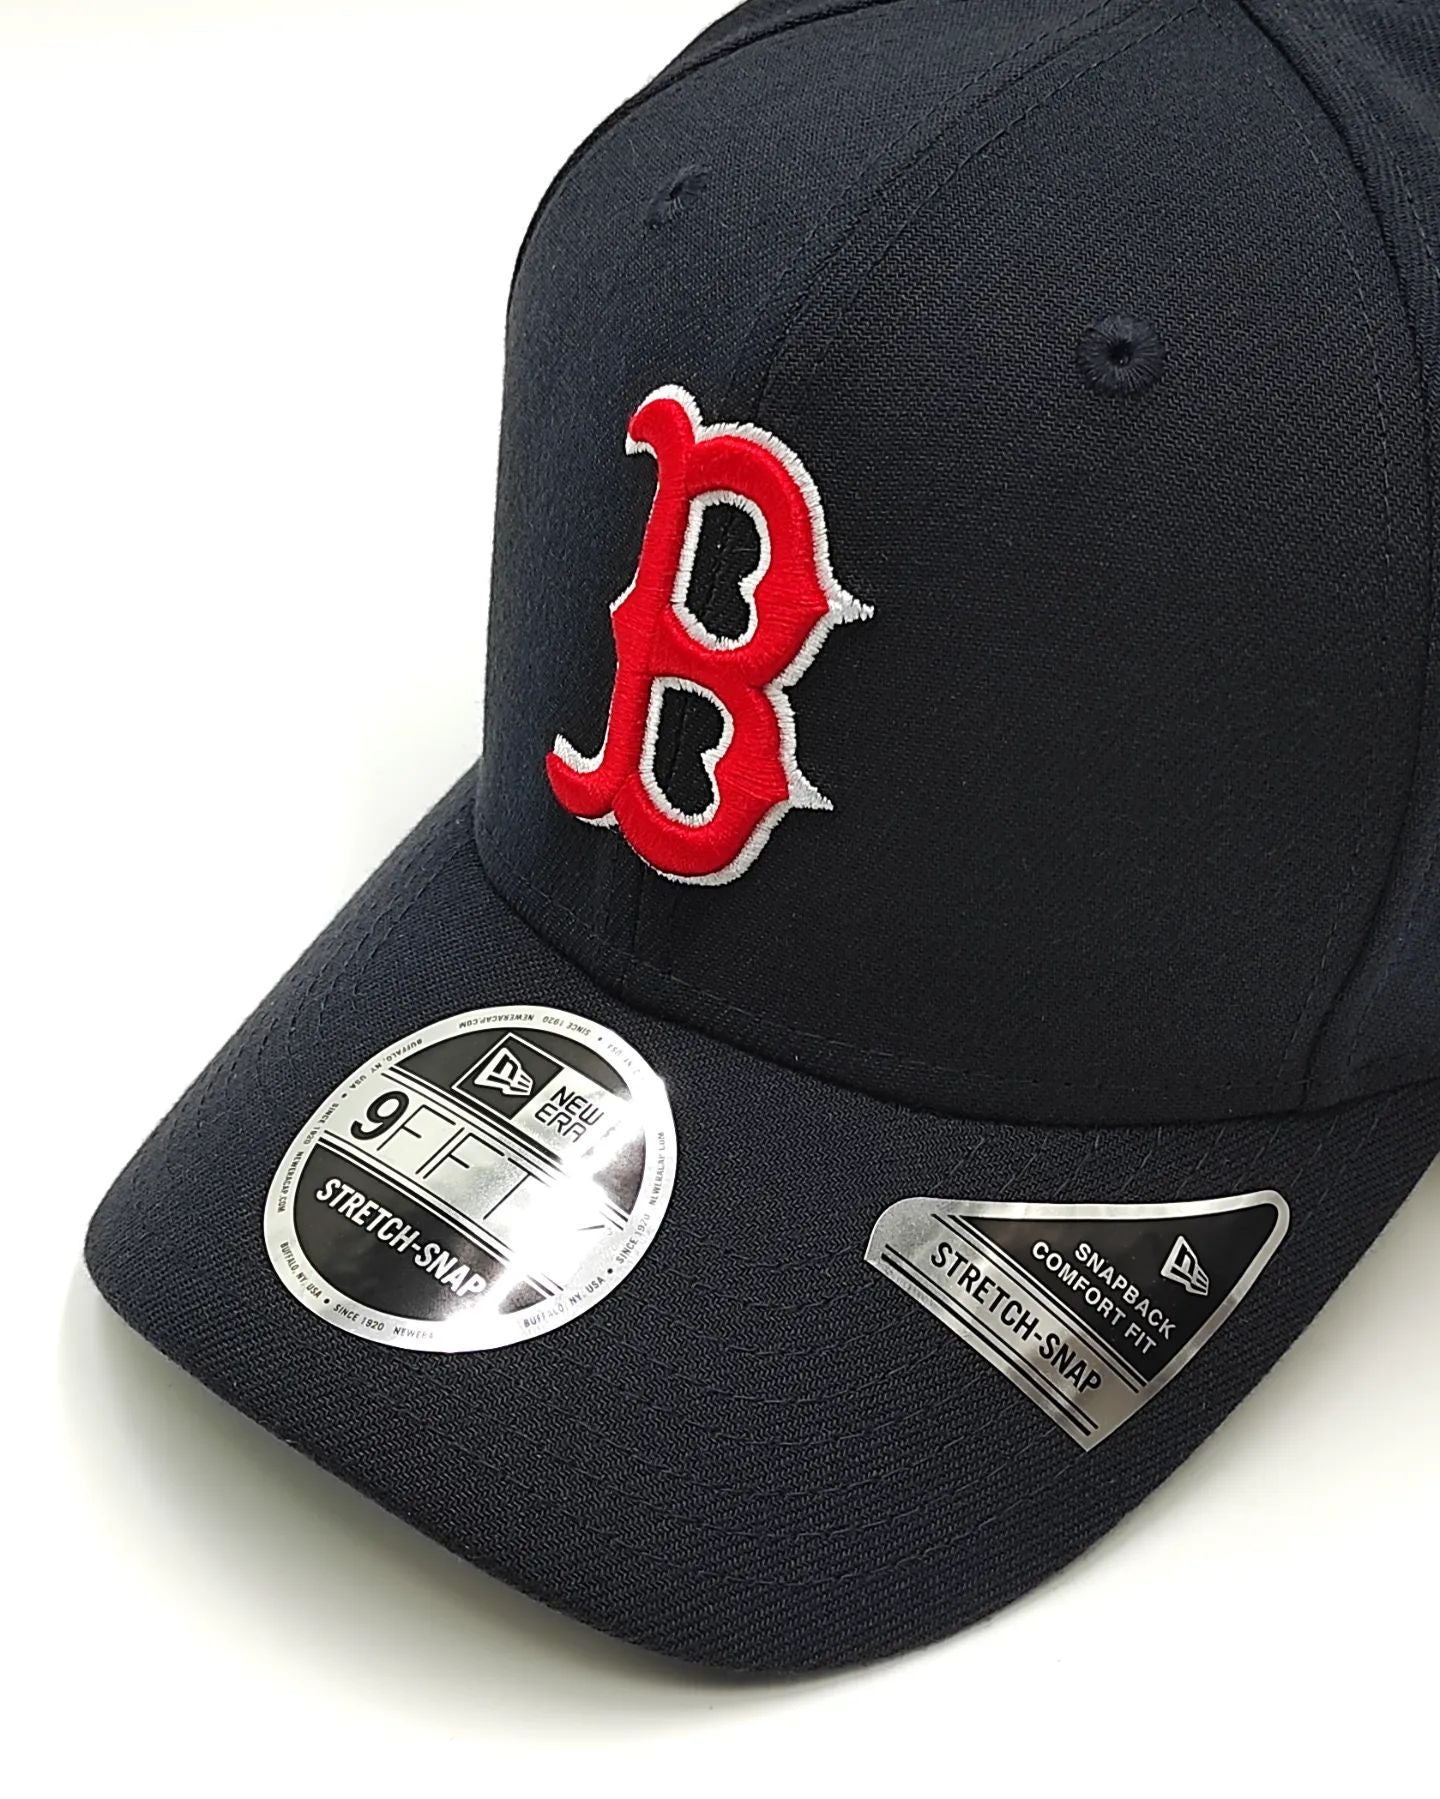 New era Boston Red Sox 9fifty strech snapback navy